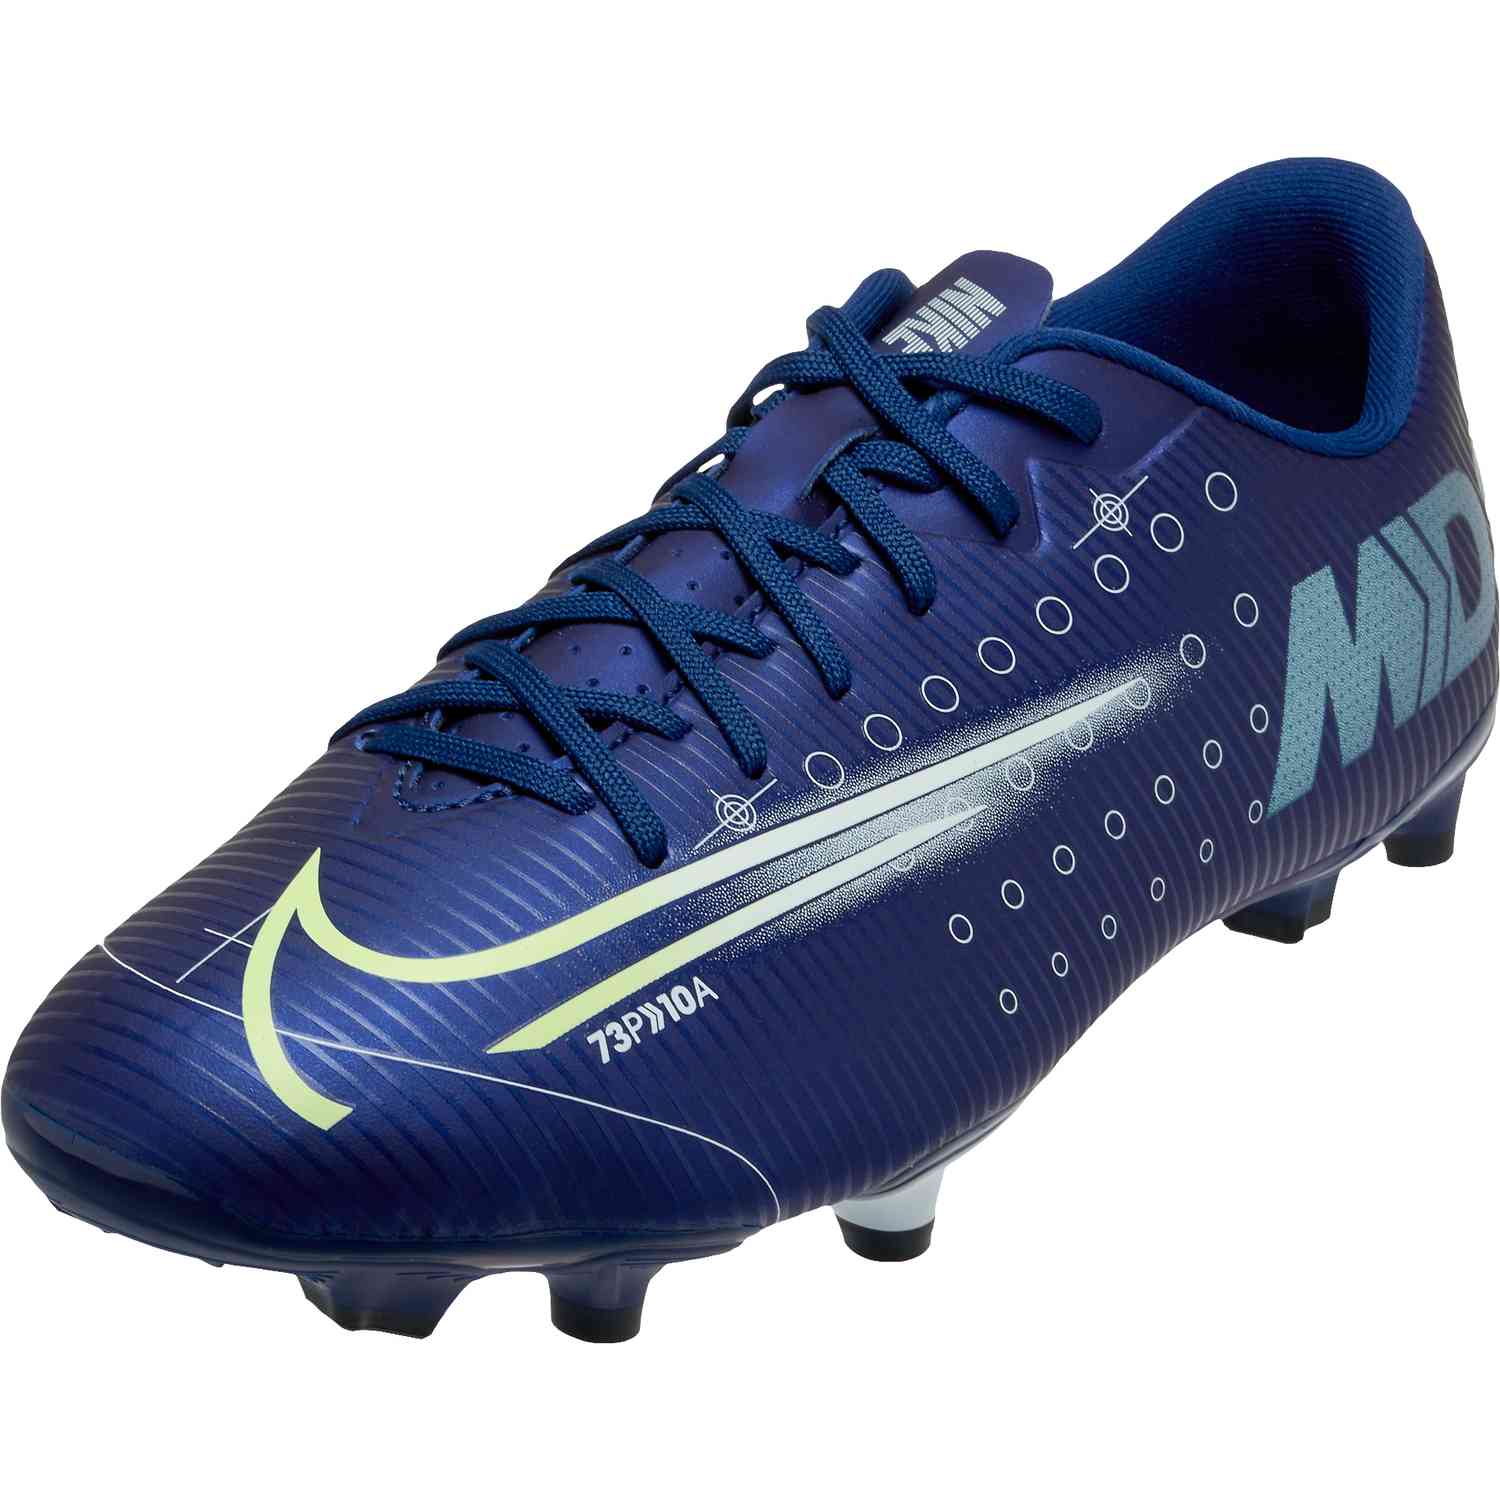 Nike Mercurial Vapor 13 Academy MDS TF Turf Soccer Shoe